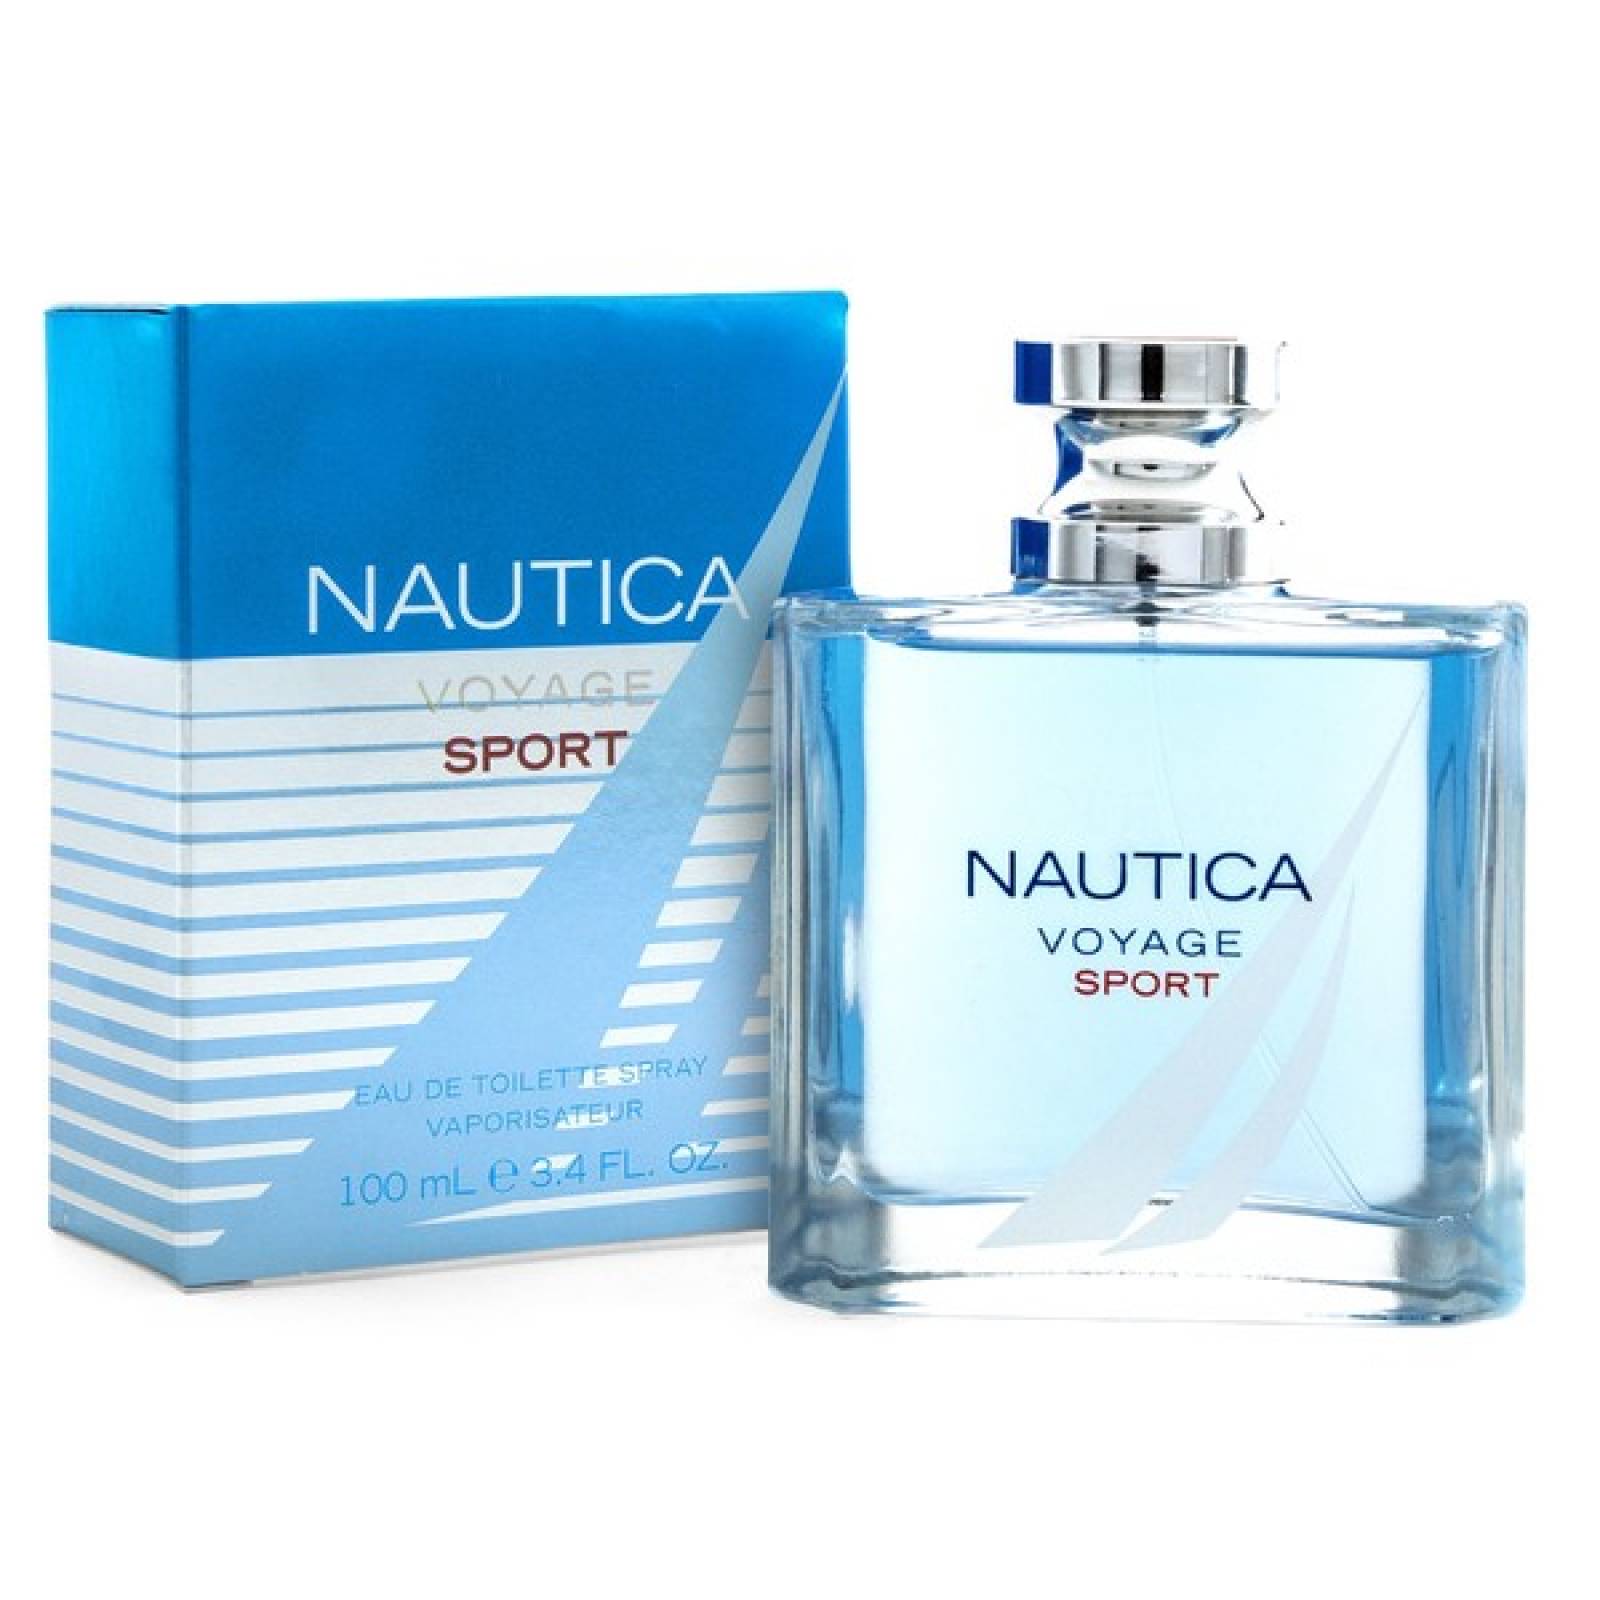 perfume nautica voyage sport precio